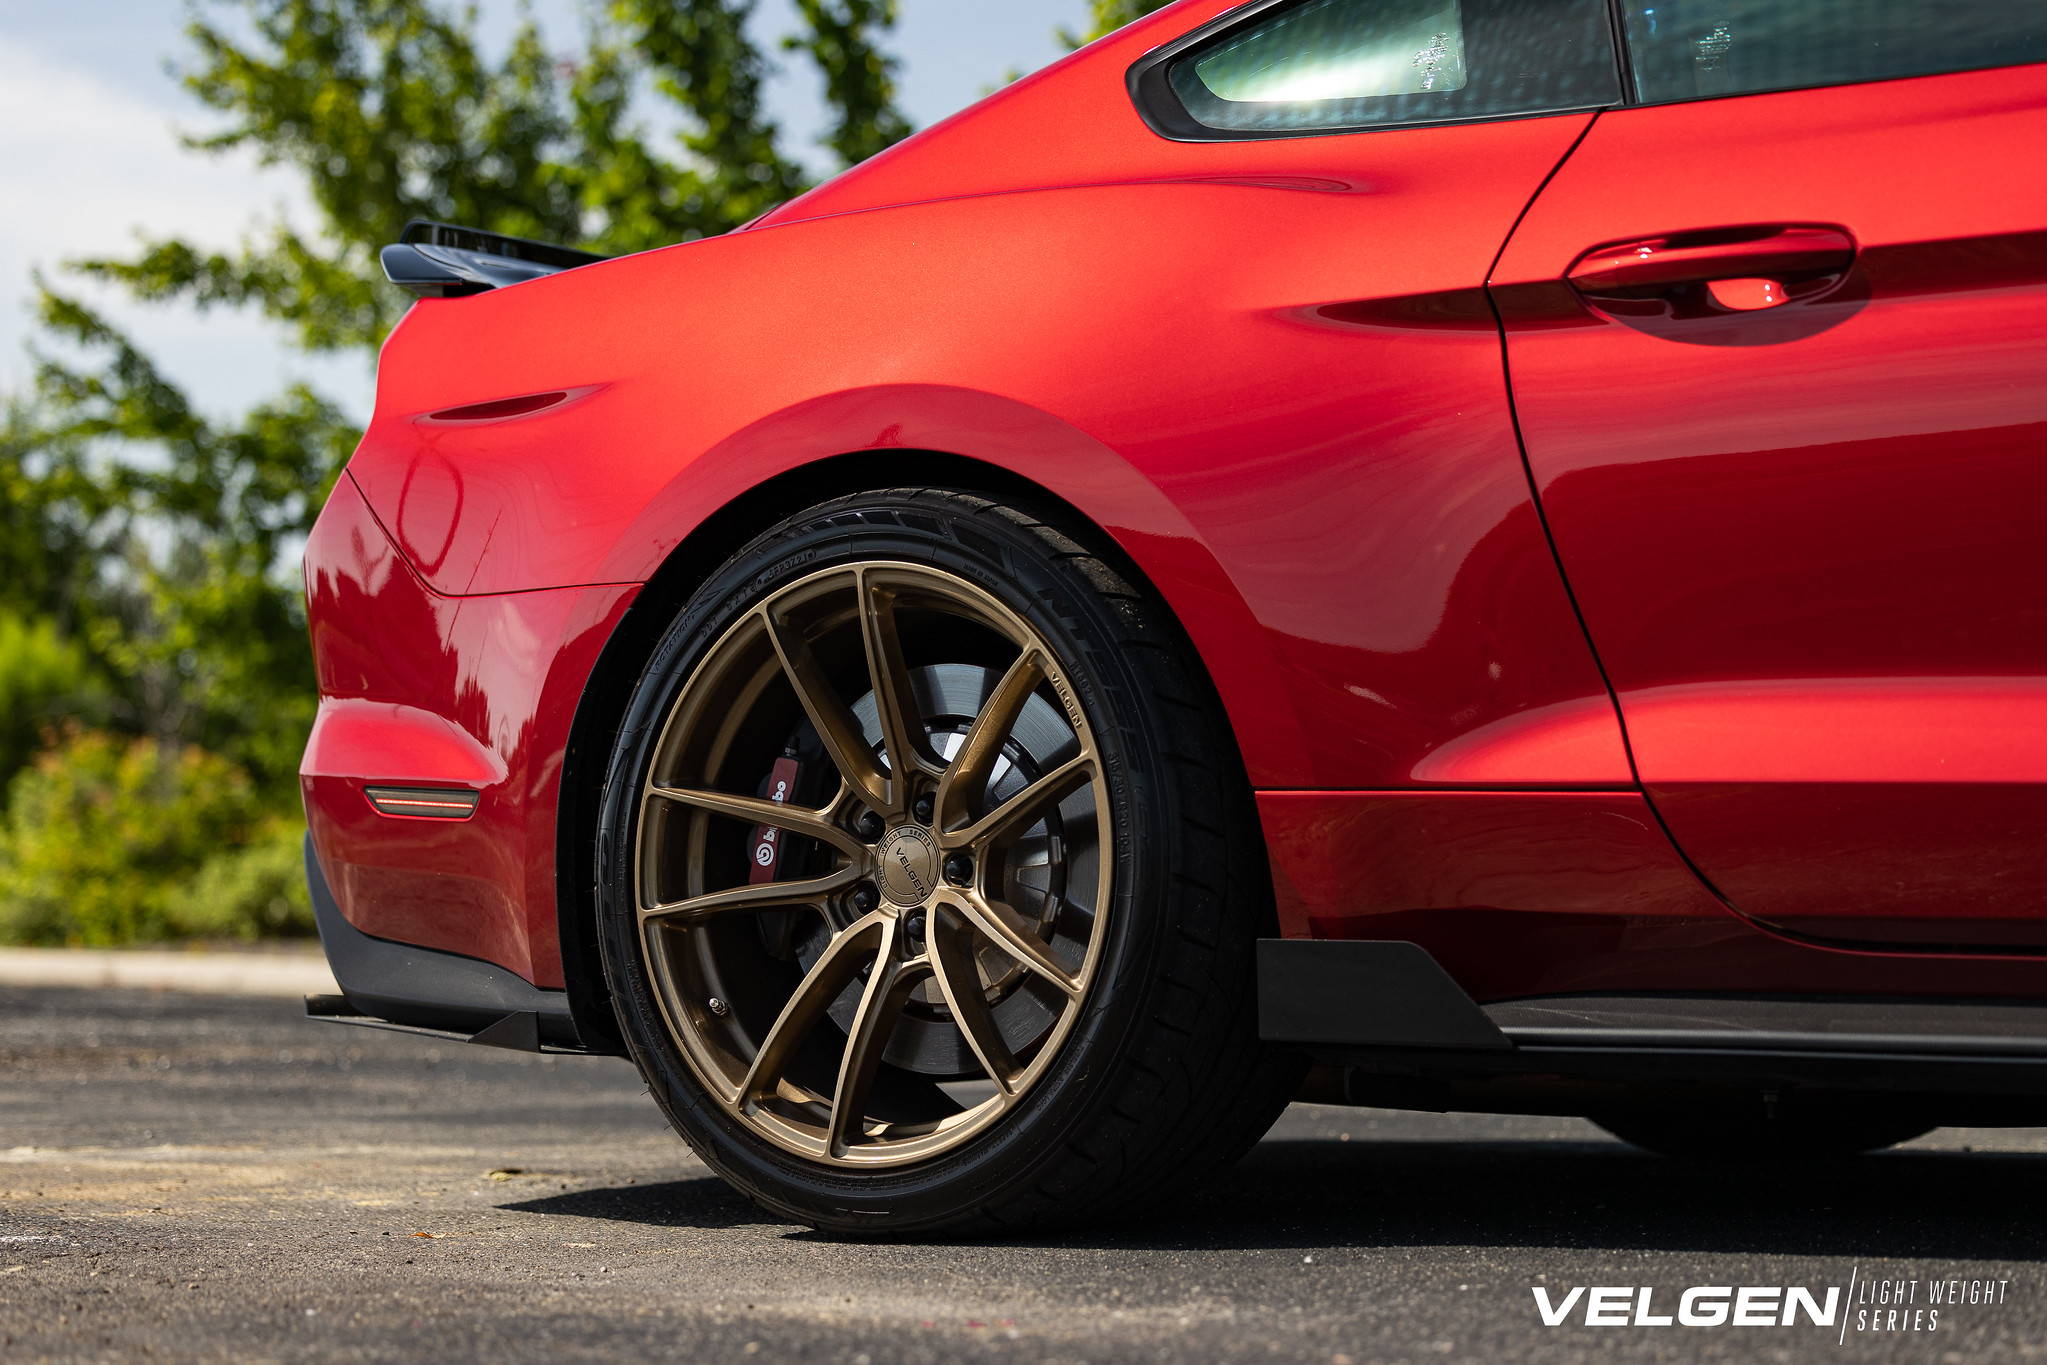 S650 Mustang Velgen wheels for your S650 Mustang | Vibe Motorsports 52289445010_39c58d9701_k